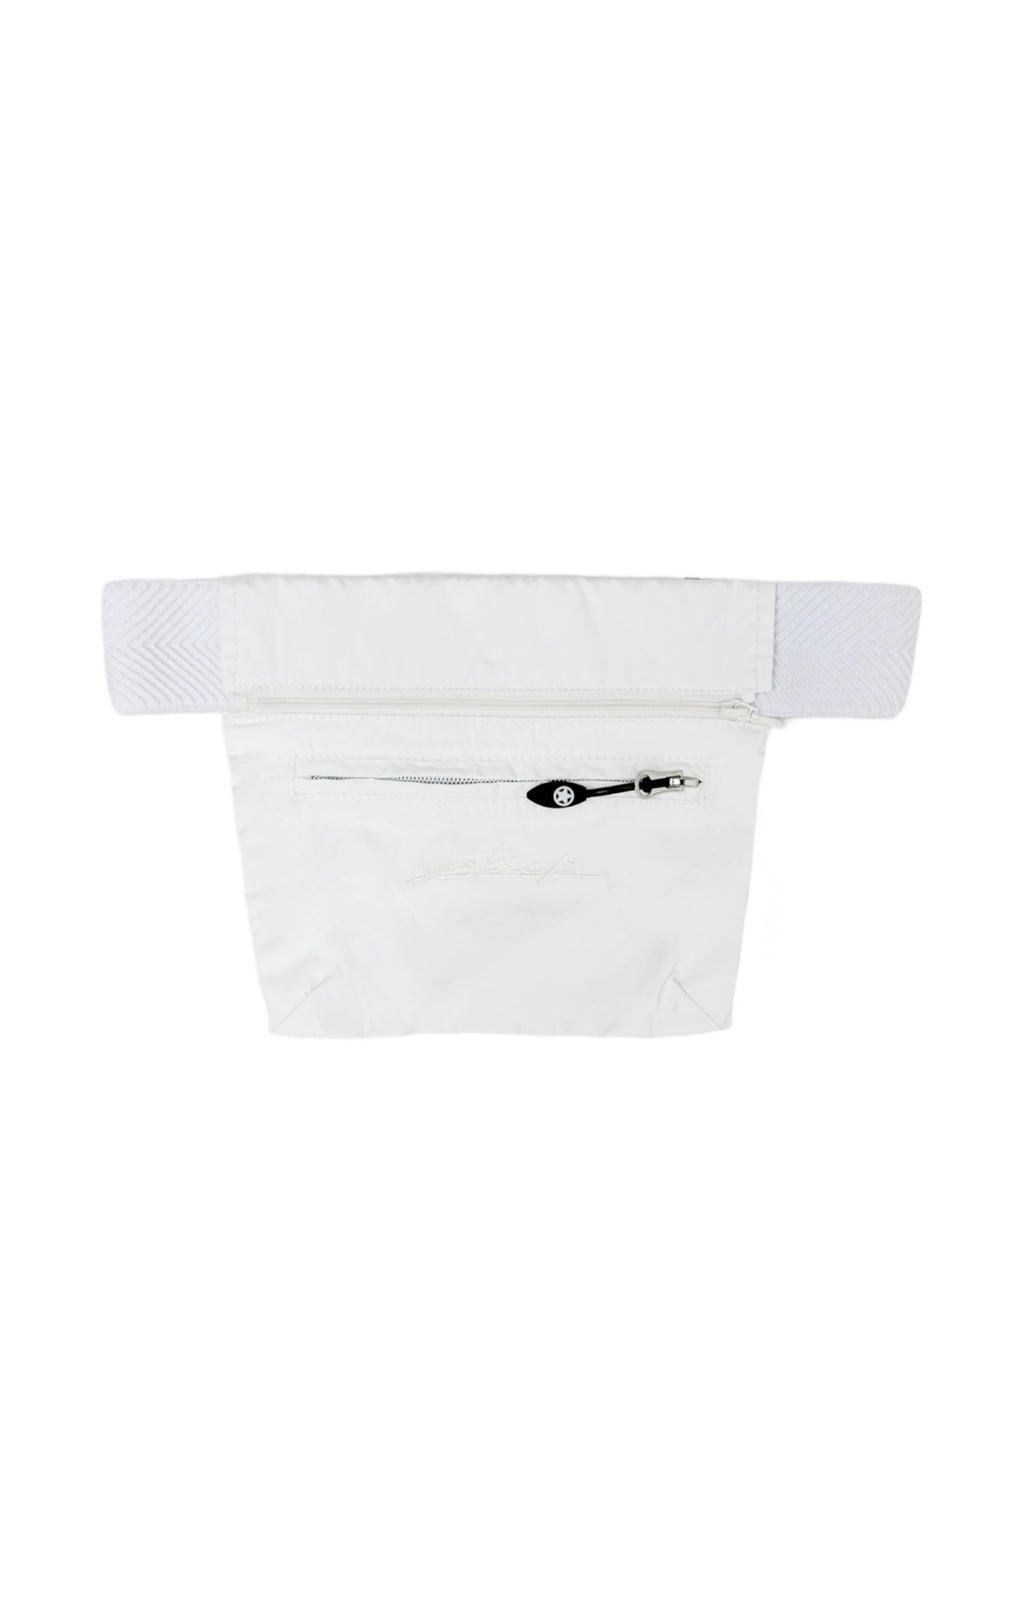 JETSET Bag Size: 9" x 5"; 13" strap